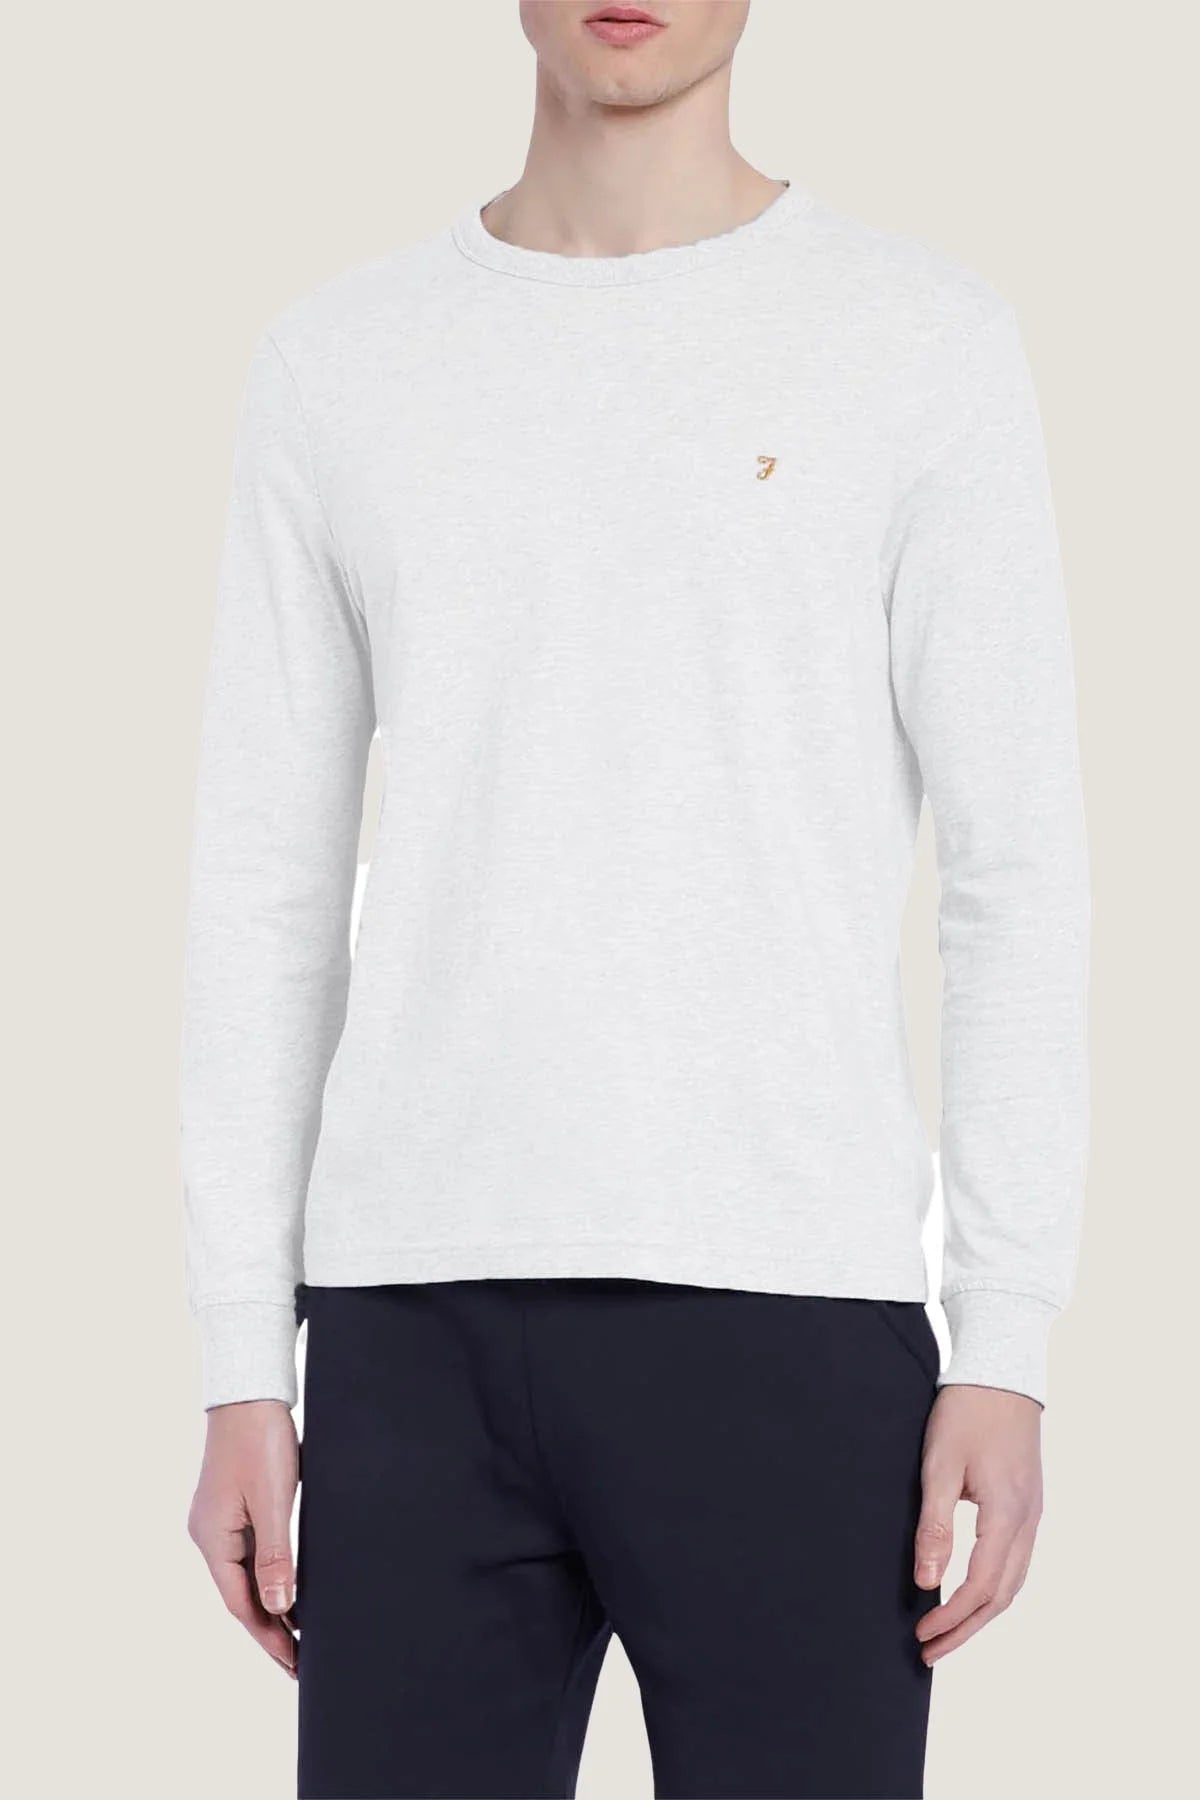 Farah Organic Cotton Long Sleeve T-Shirt White / XS